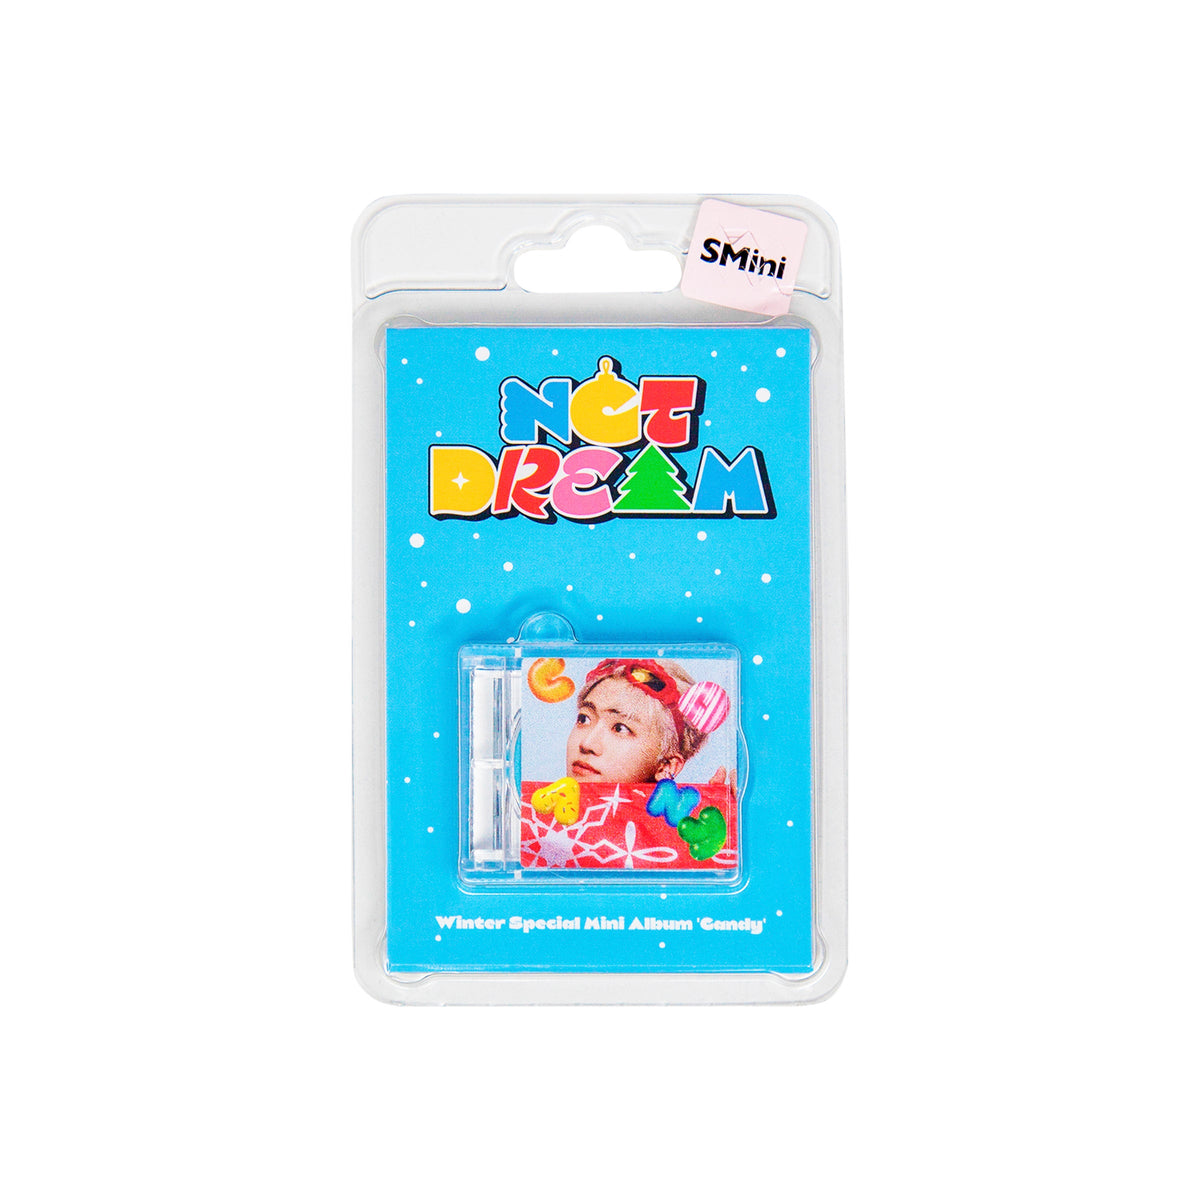 NCT DREAM Candy Winter Special Mini Album - SMini Version Jaemin Ver Main Product Image